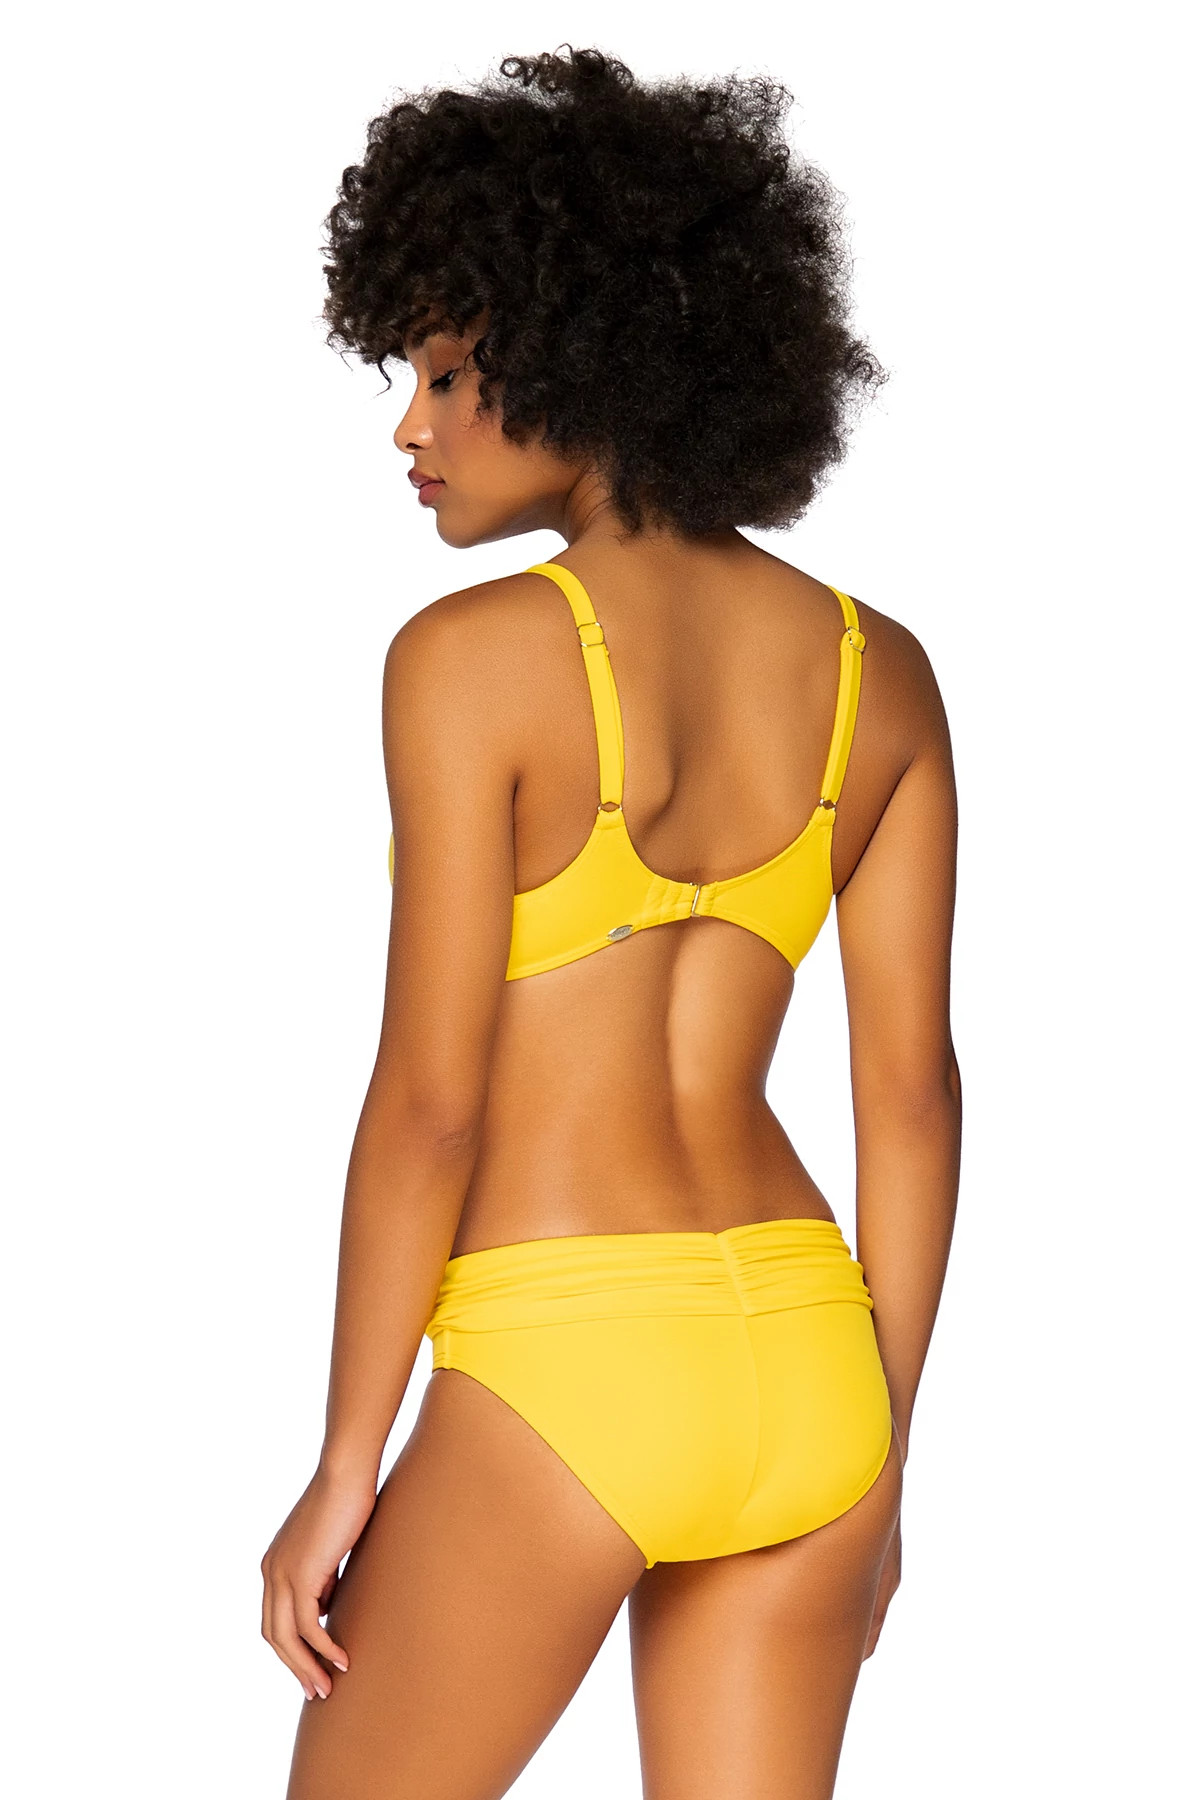 HAWAIIAN SUN Carmen Underwire Bikini Top (E-H Cup) image number 2